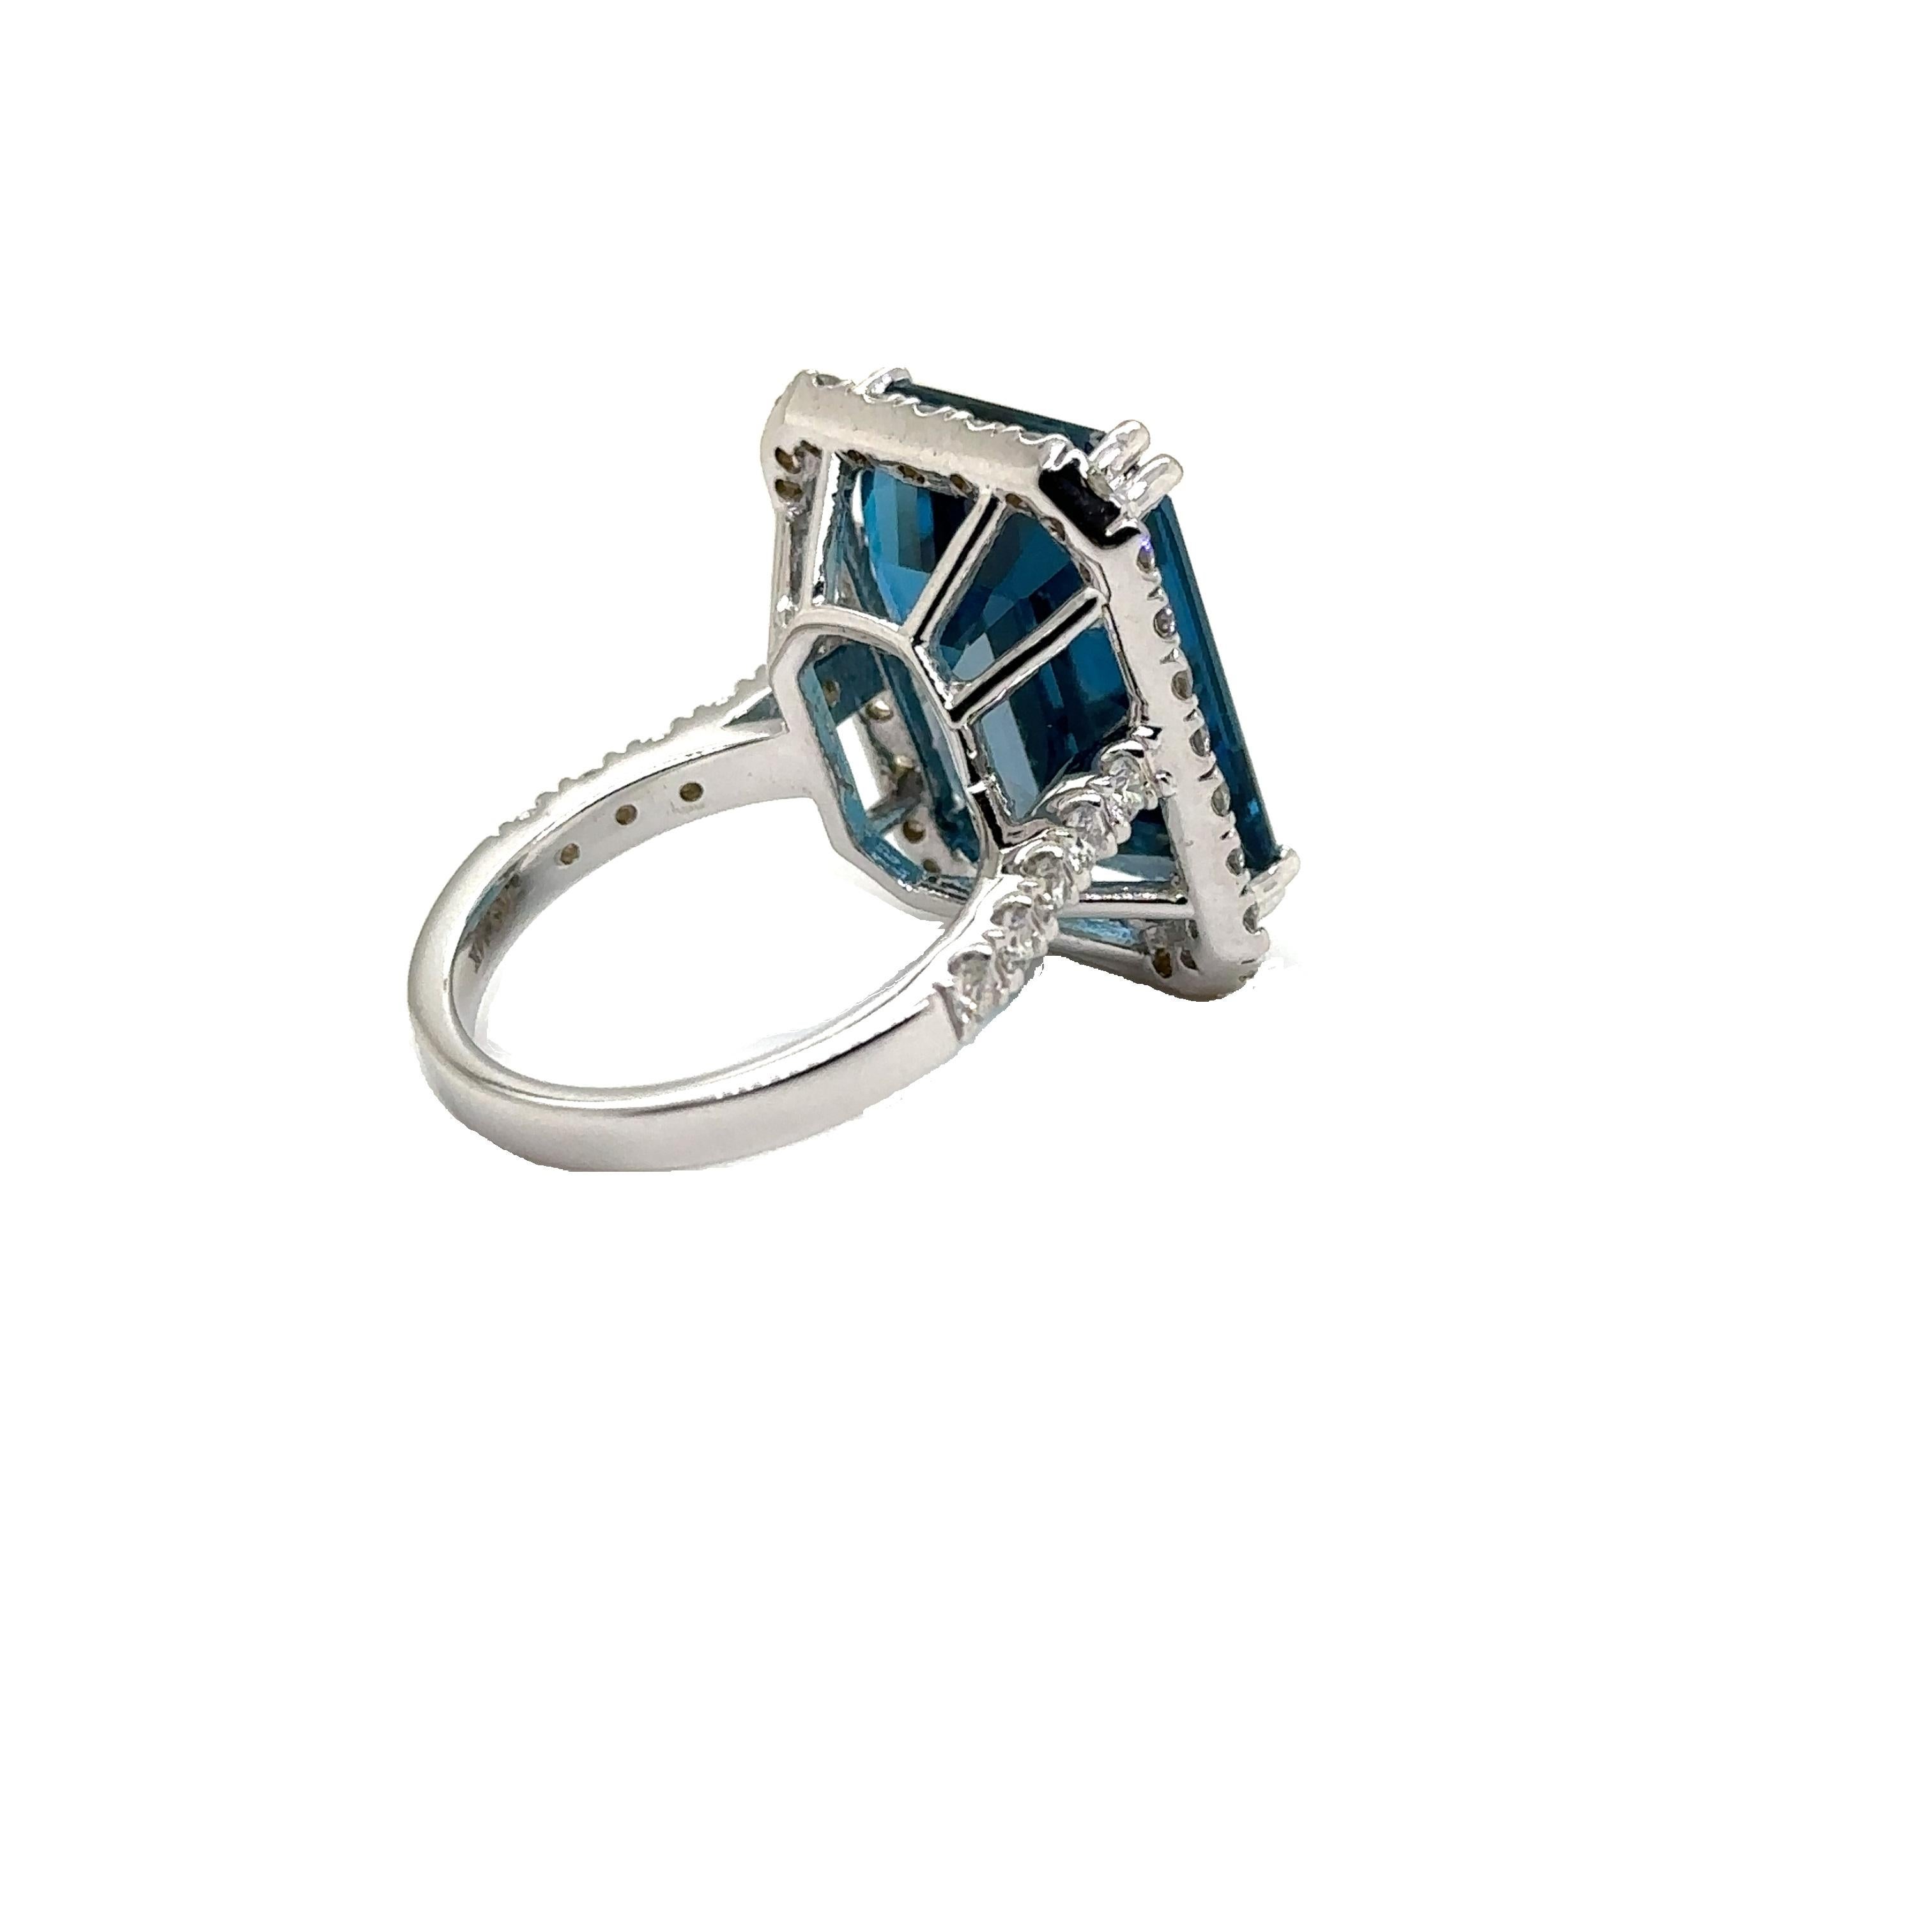 Emerald Cut JAS-21-2245 - 14K WG 1.25ct GH-SI1 DIAMONDS & EMERALD CUT LONDON BLUE TOPAZ RING For Sale